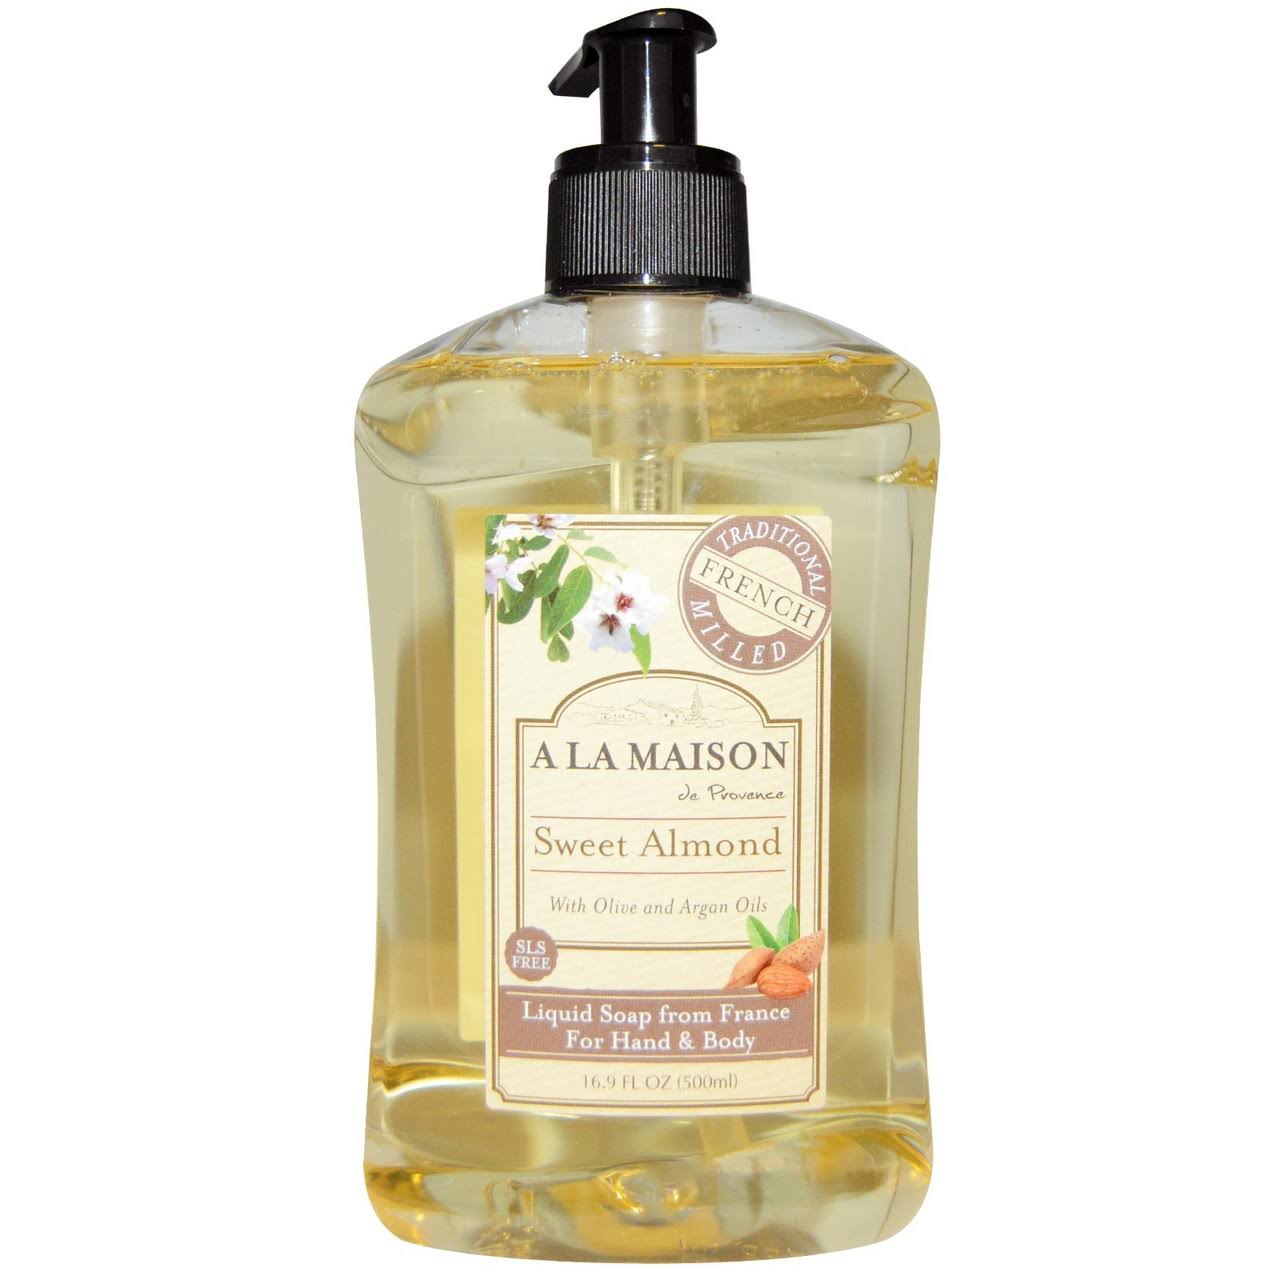 A La Maison De Provence, Liquid Soap for Hand & Body, Sweet Almond, 16.9 fl oz (500 ml)